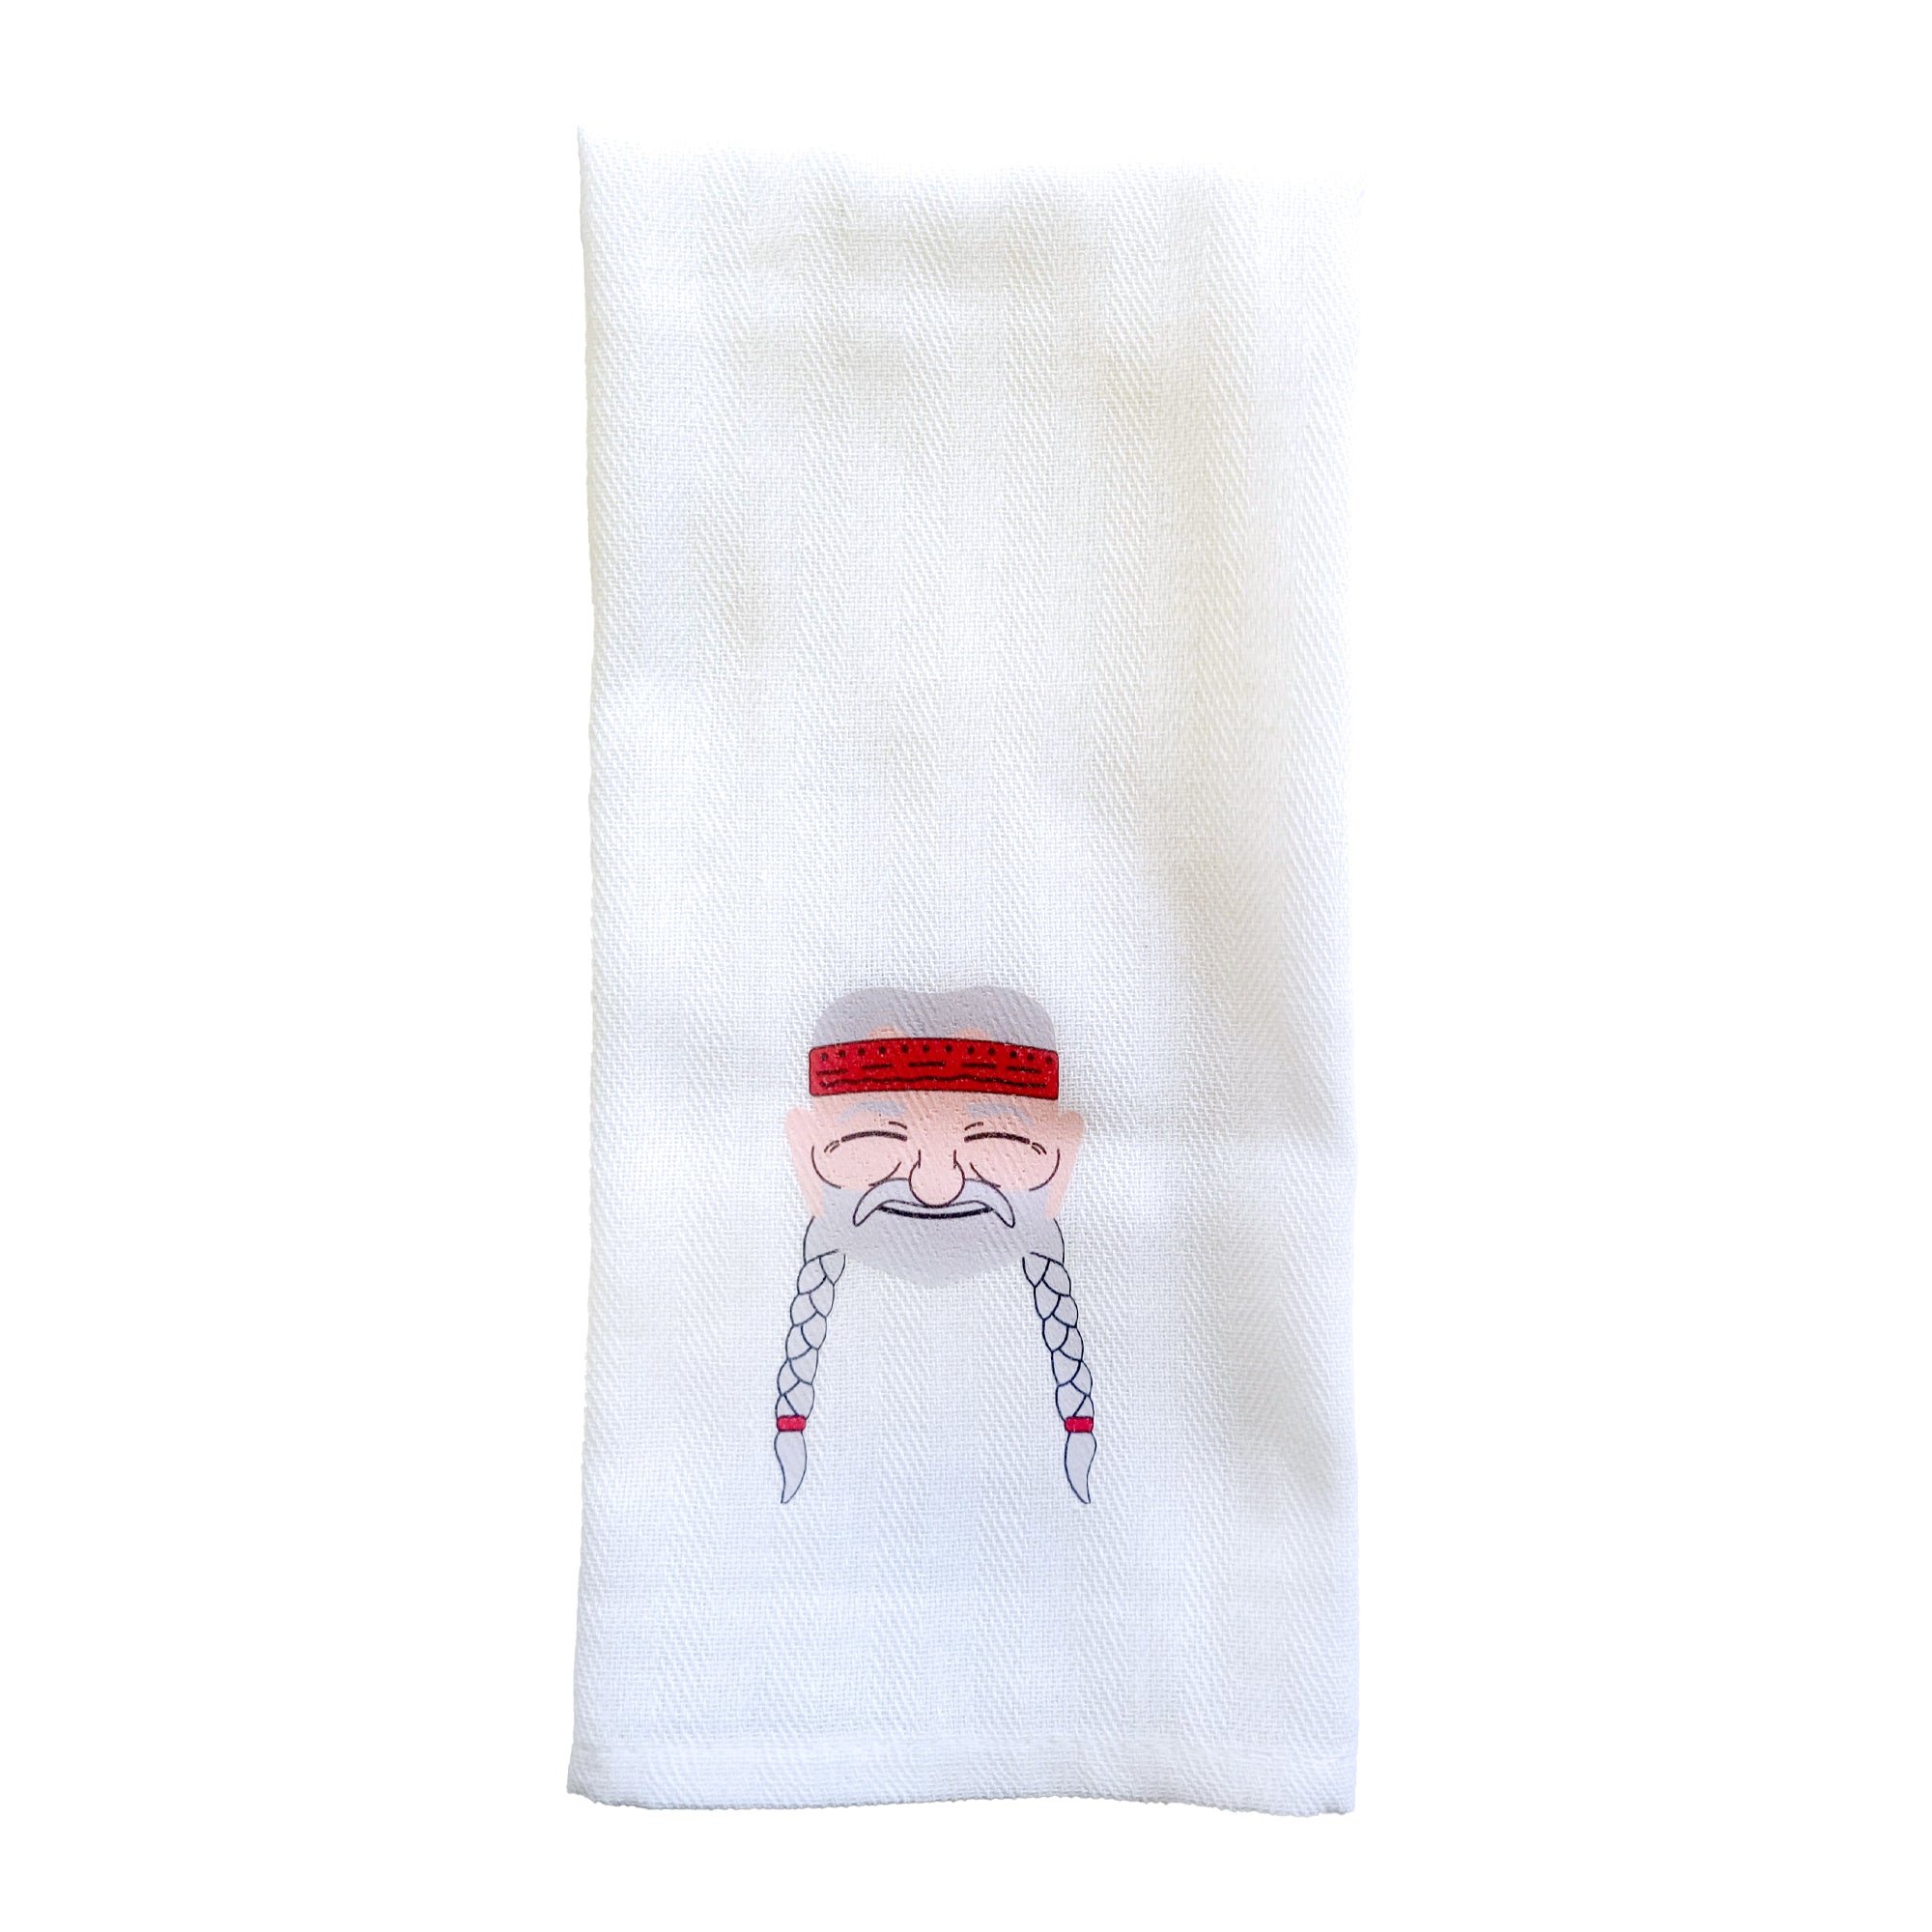 Willie Nelson Tea Towel